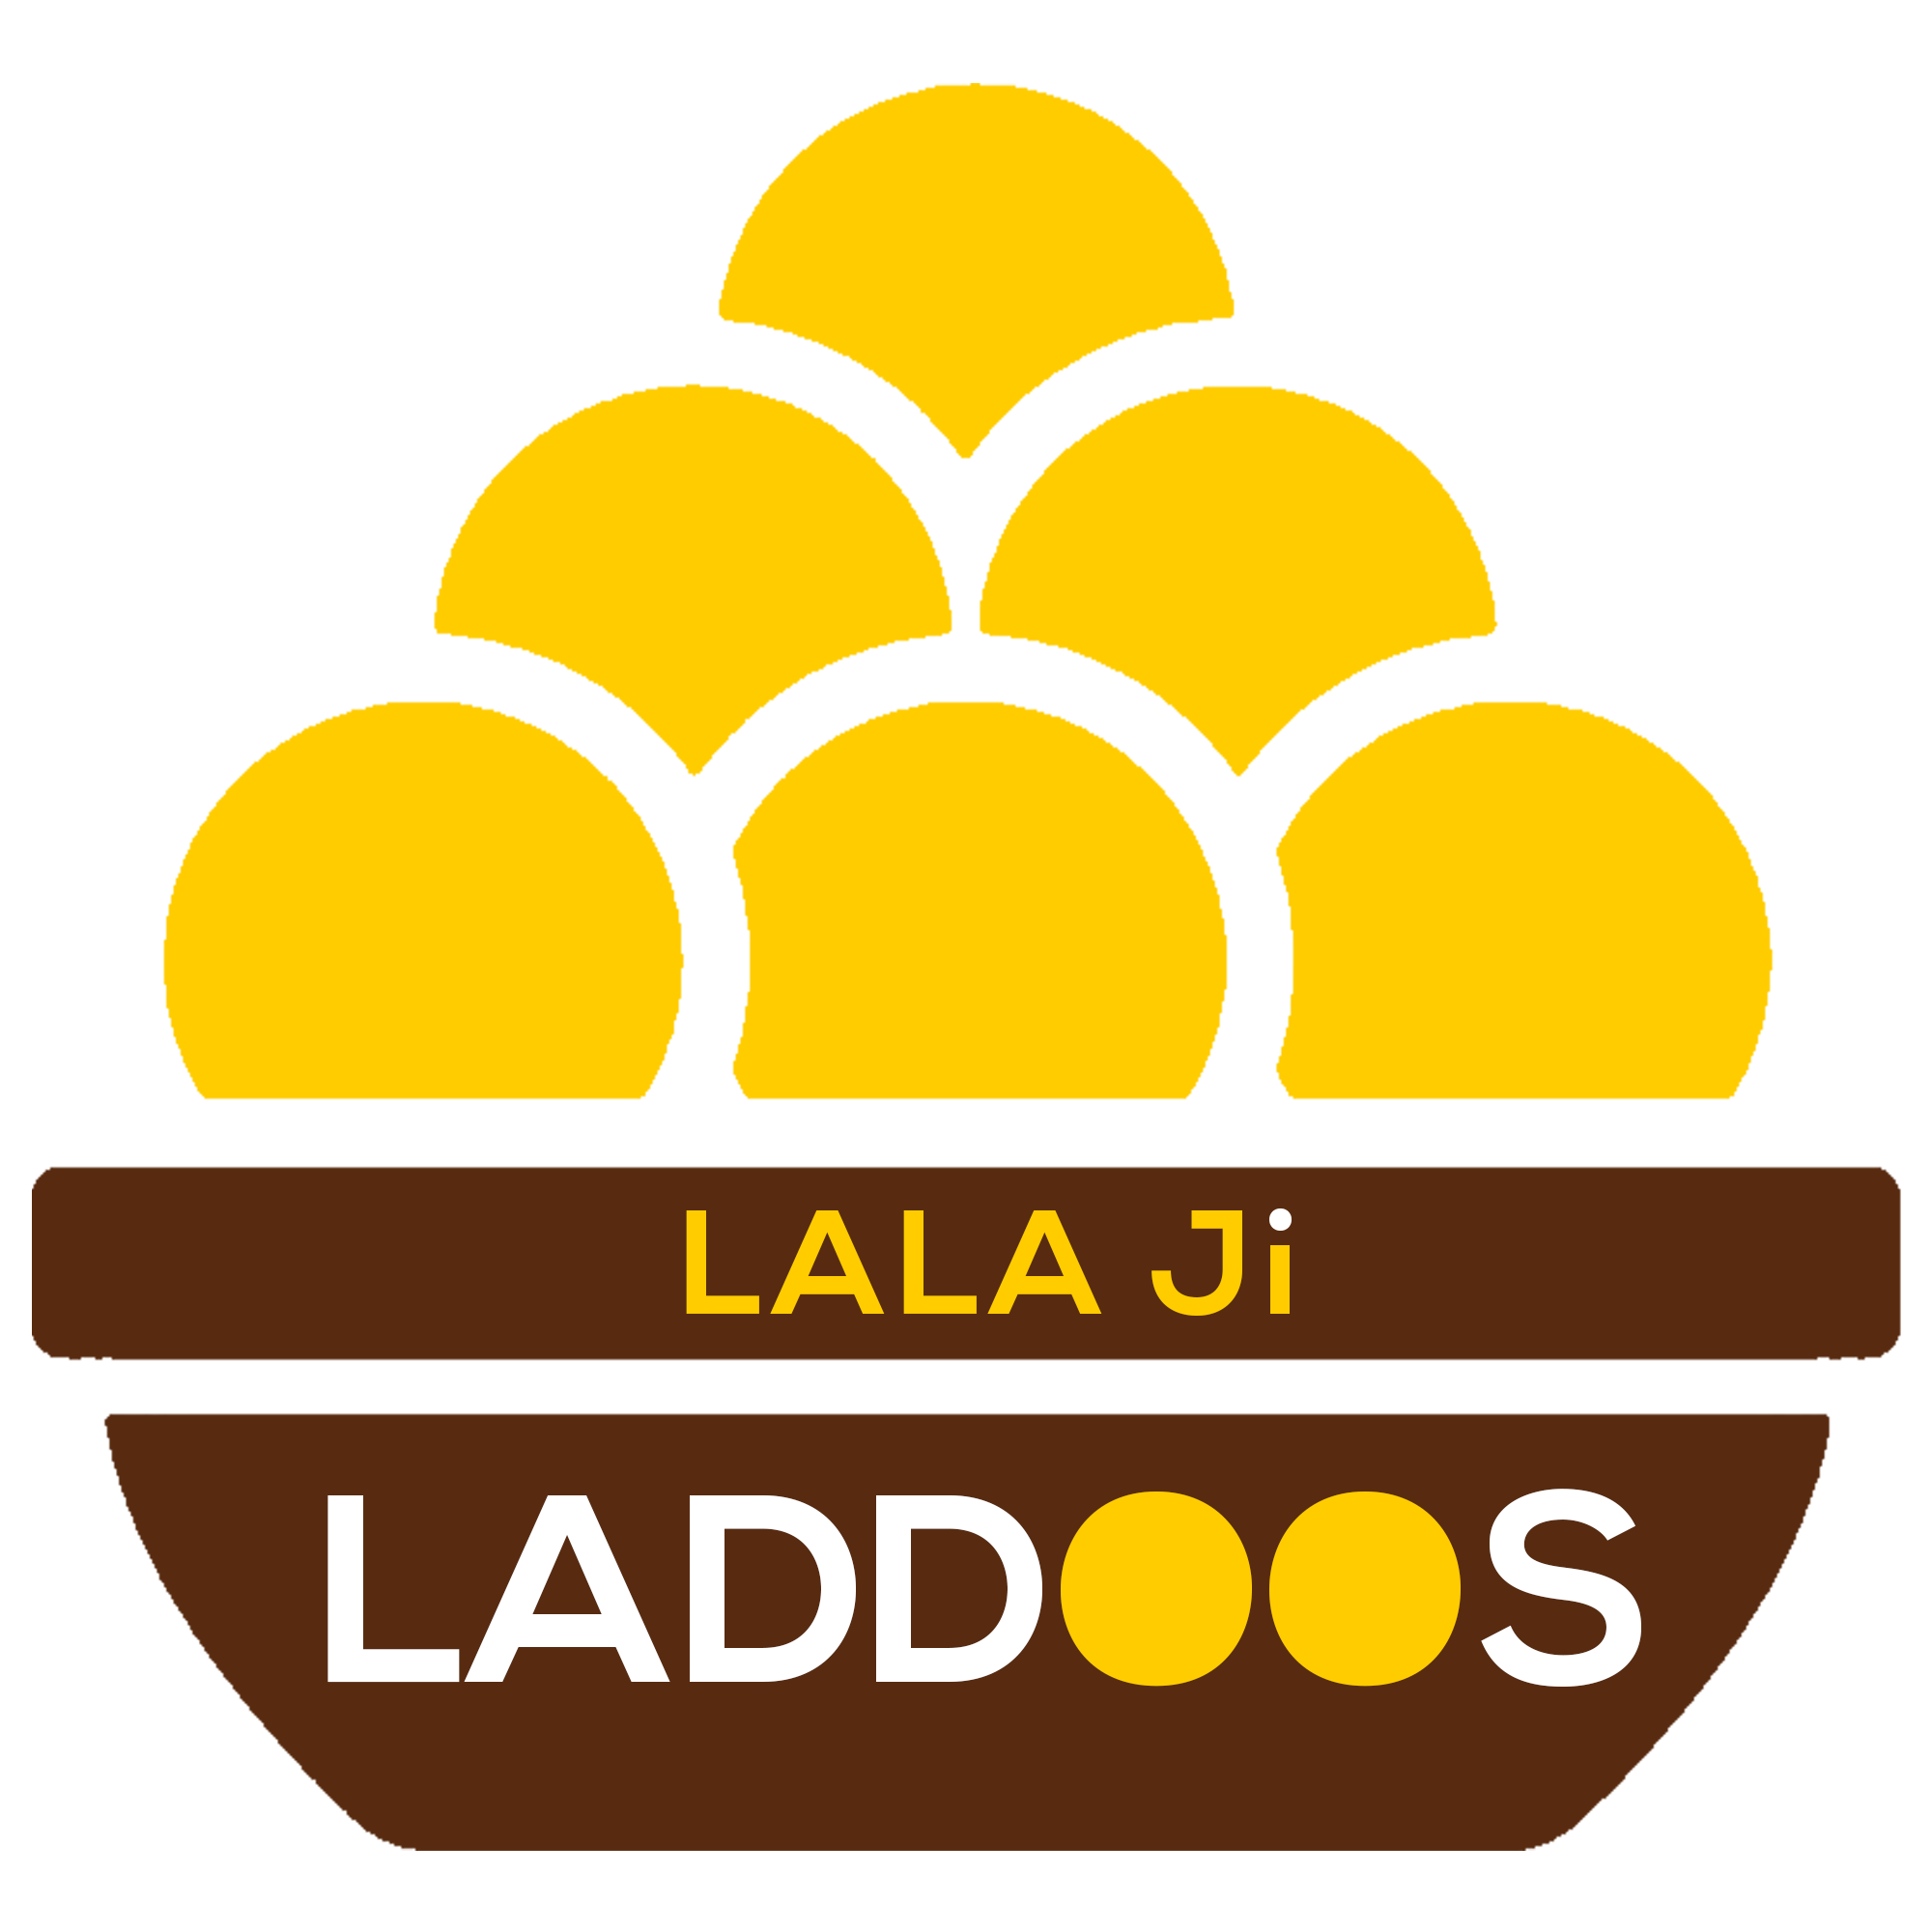 Lalaji Laddos